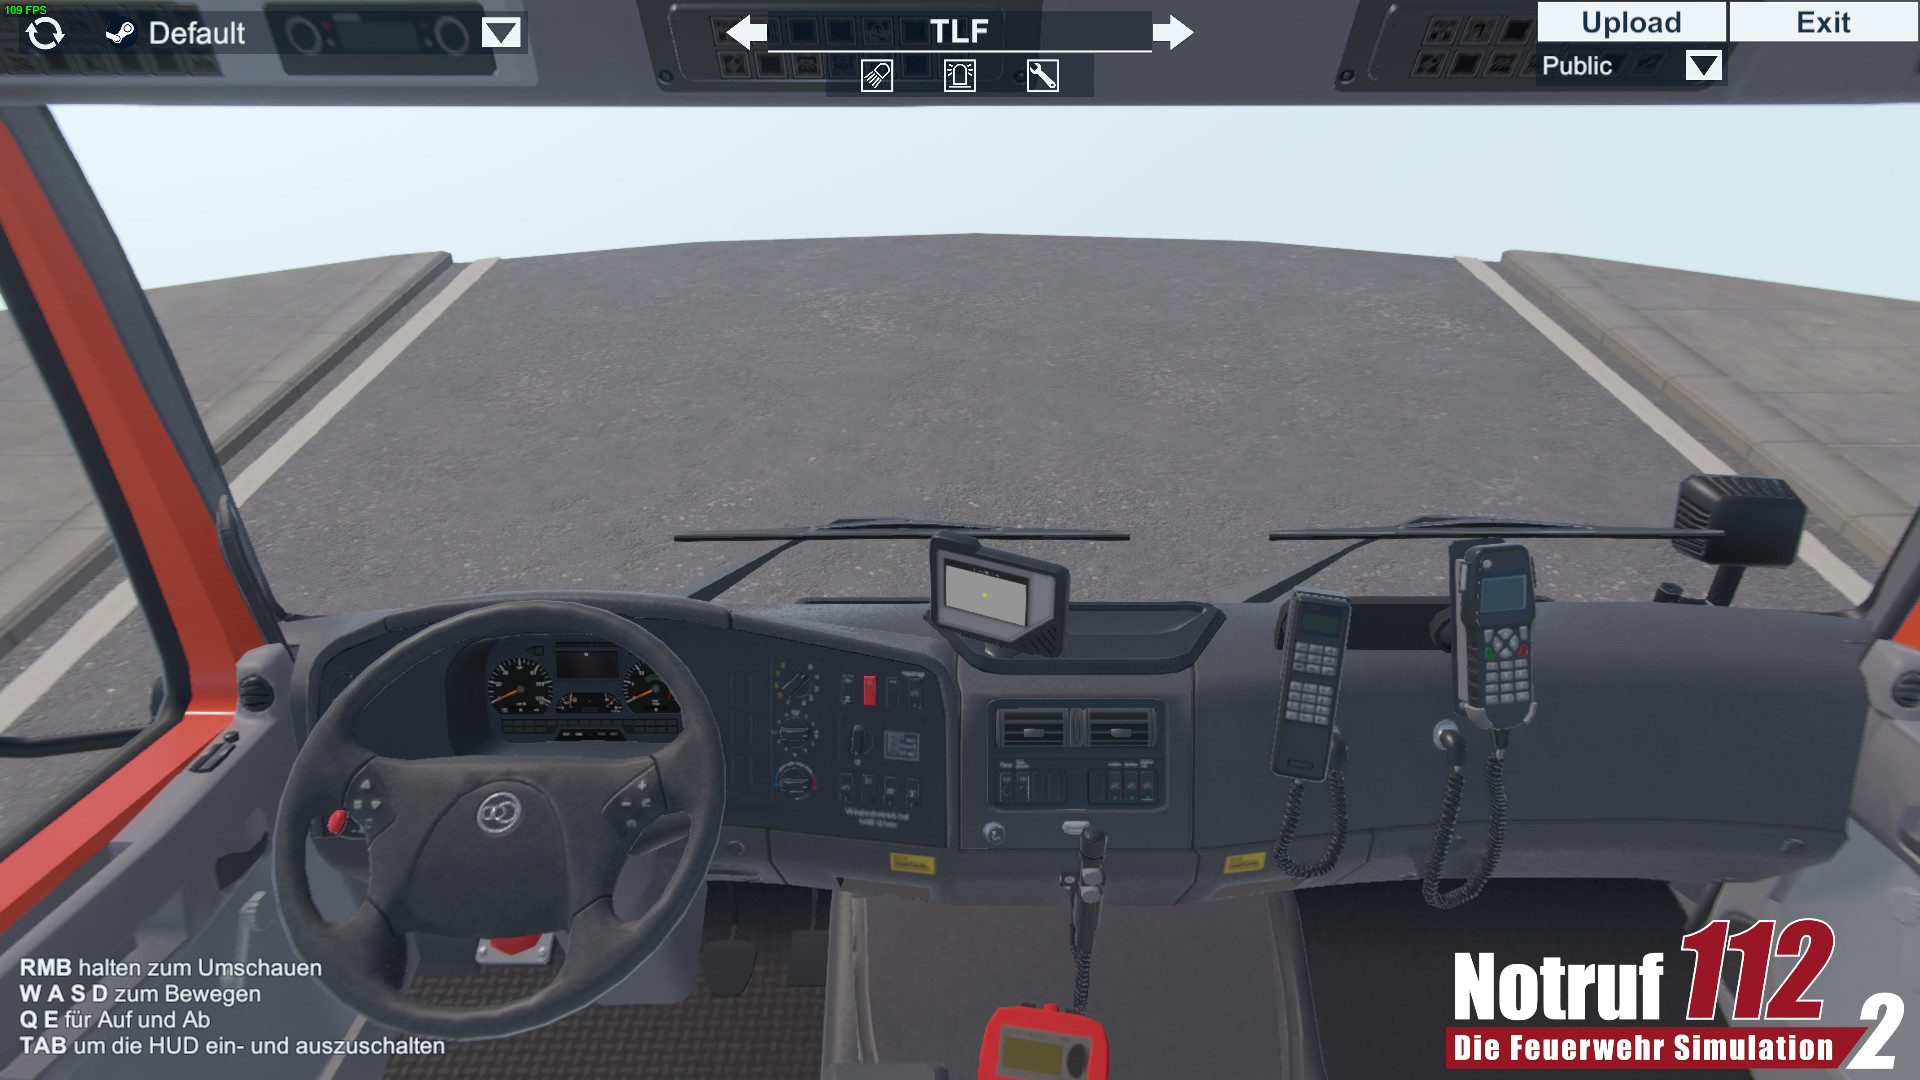 Notruf 112 - Die Feuerwehr Simulation 2: Showroom Screenshots · SteamDB